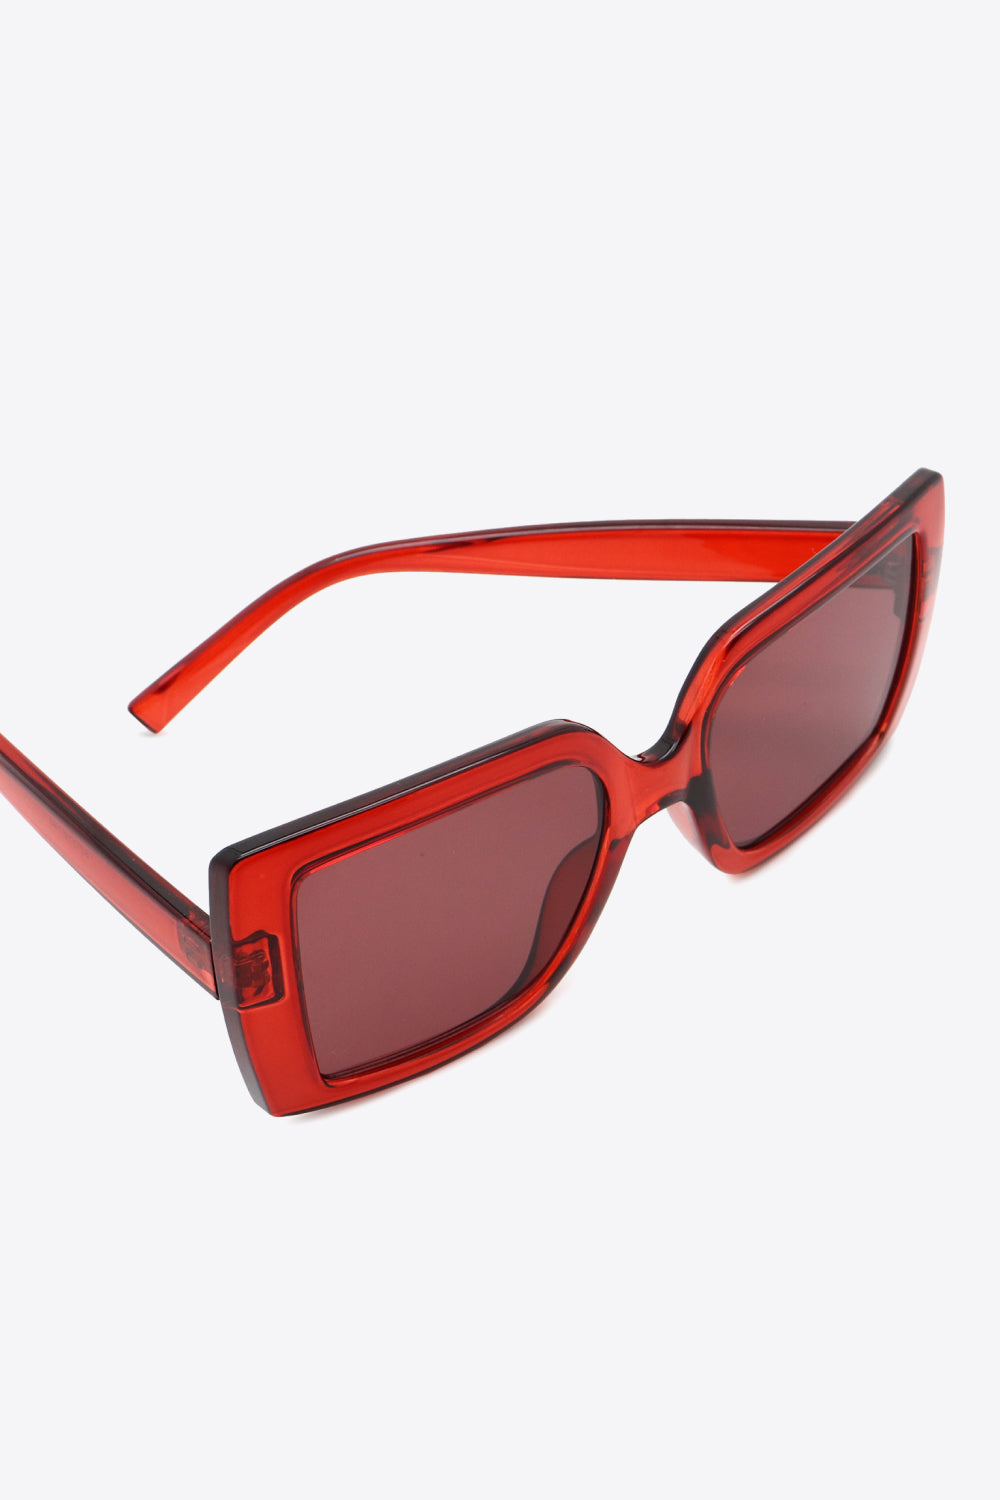 Uylee’s Boutique Acetate Lens Square Sunglasses